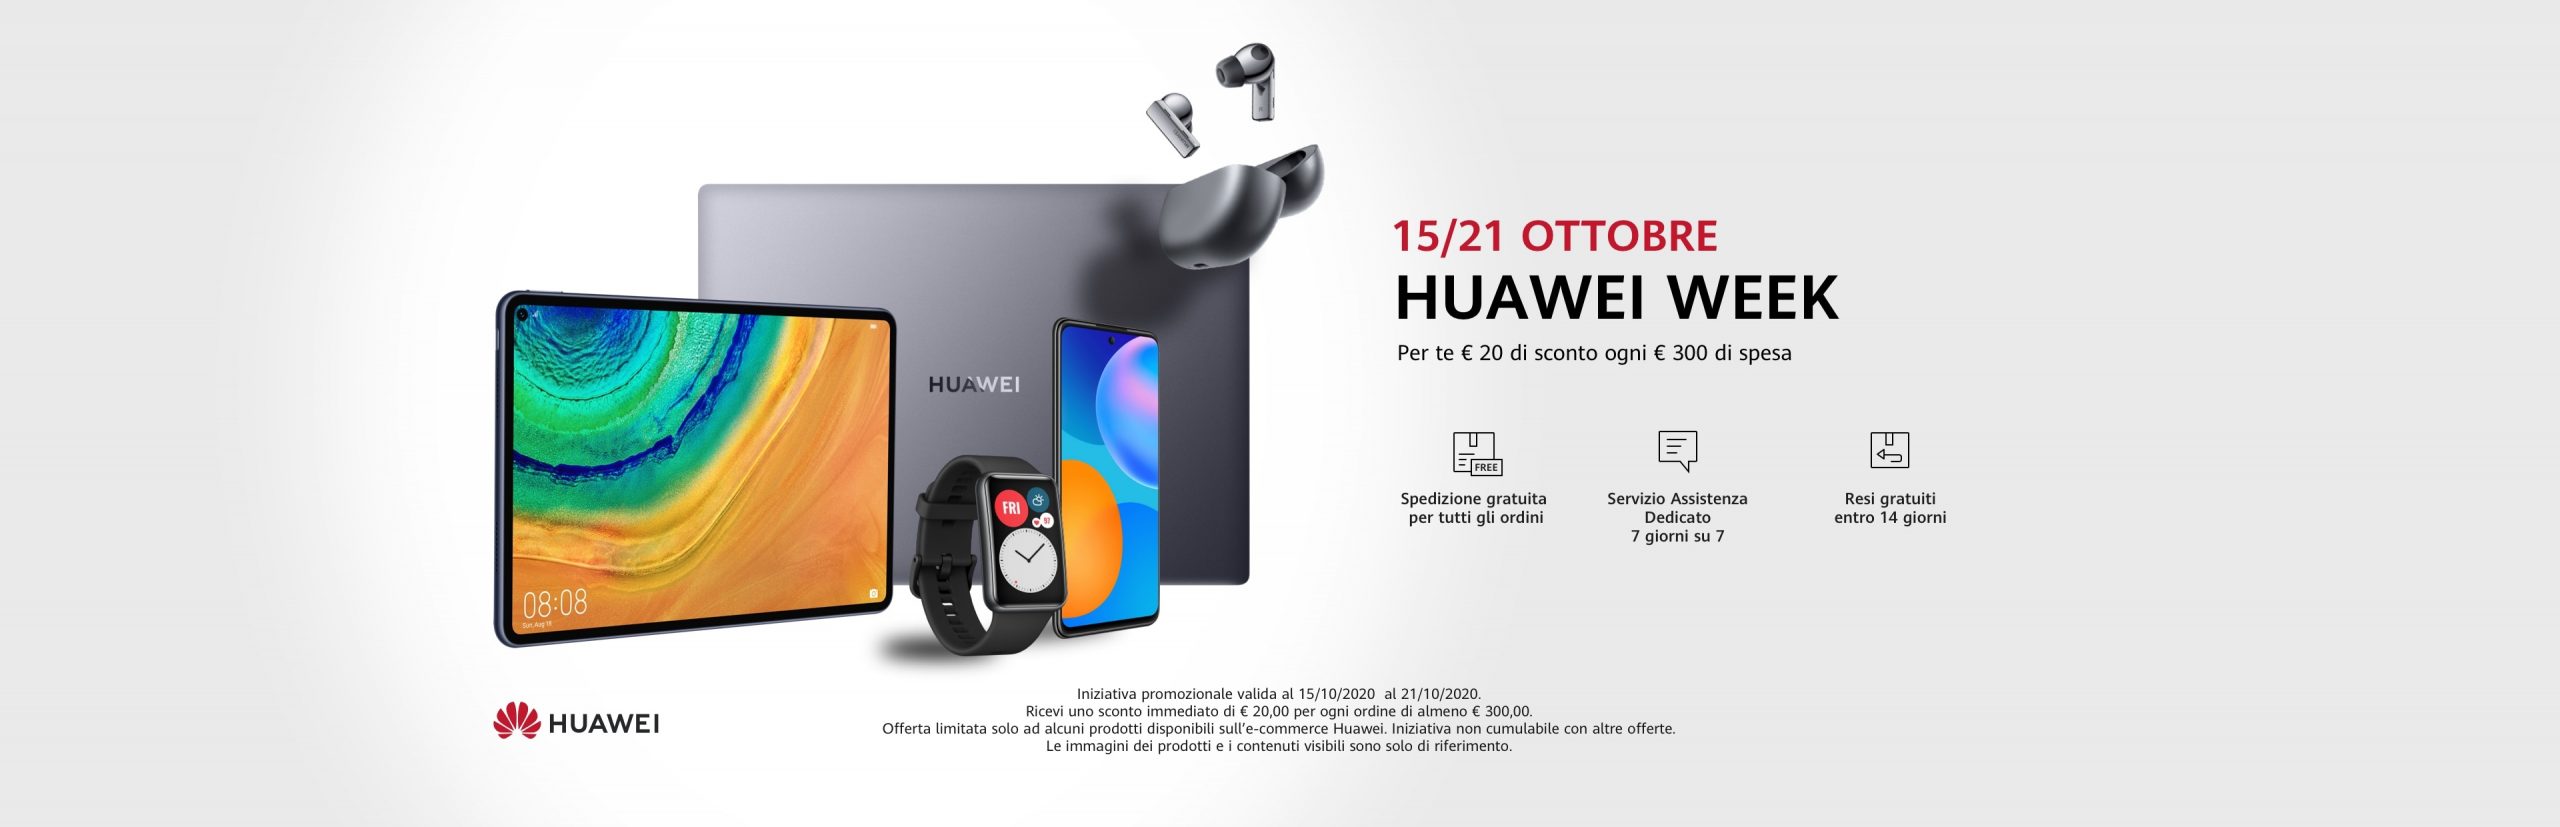 Huawei Week 15-21 ottobre 2020